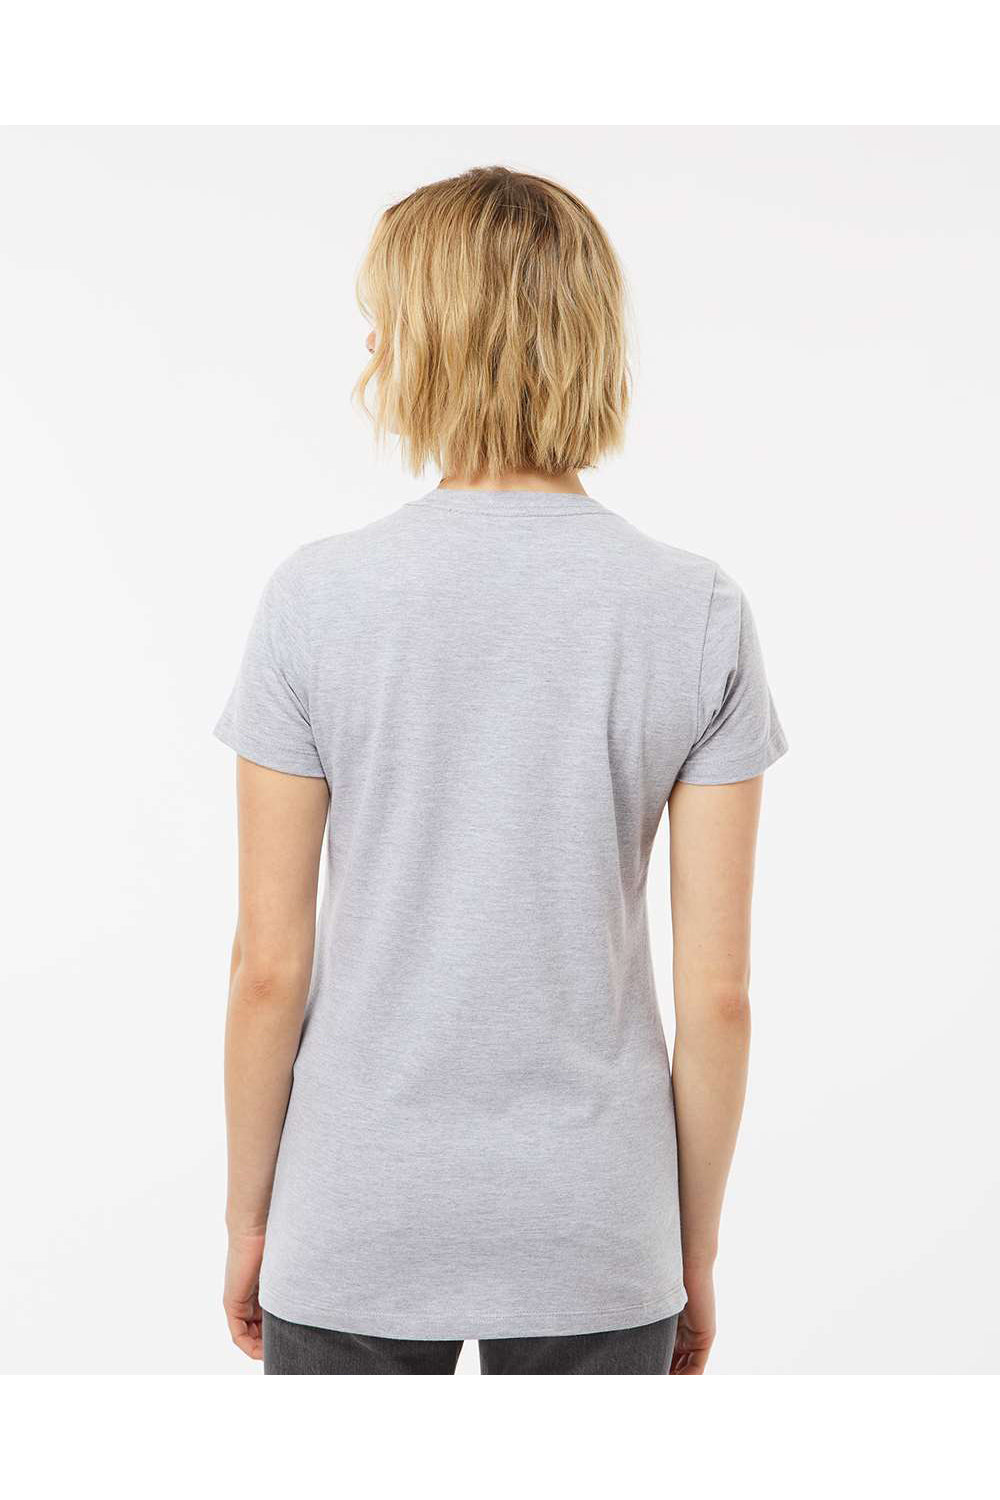 Tultex 516 Womens Premium Short Sleeve Crewneck T-Shirt Heather Grey Model Back